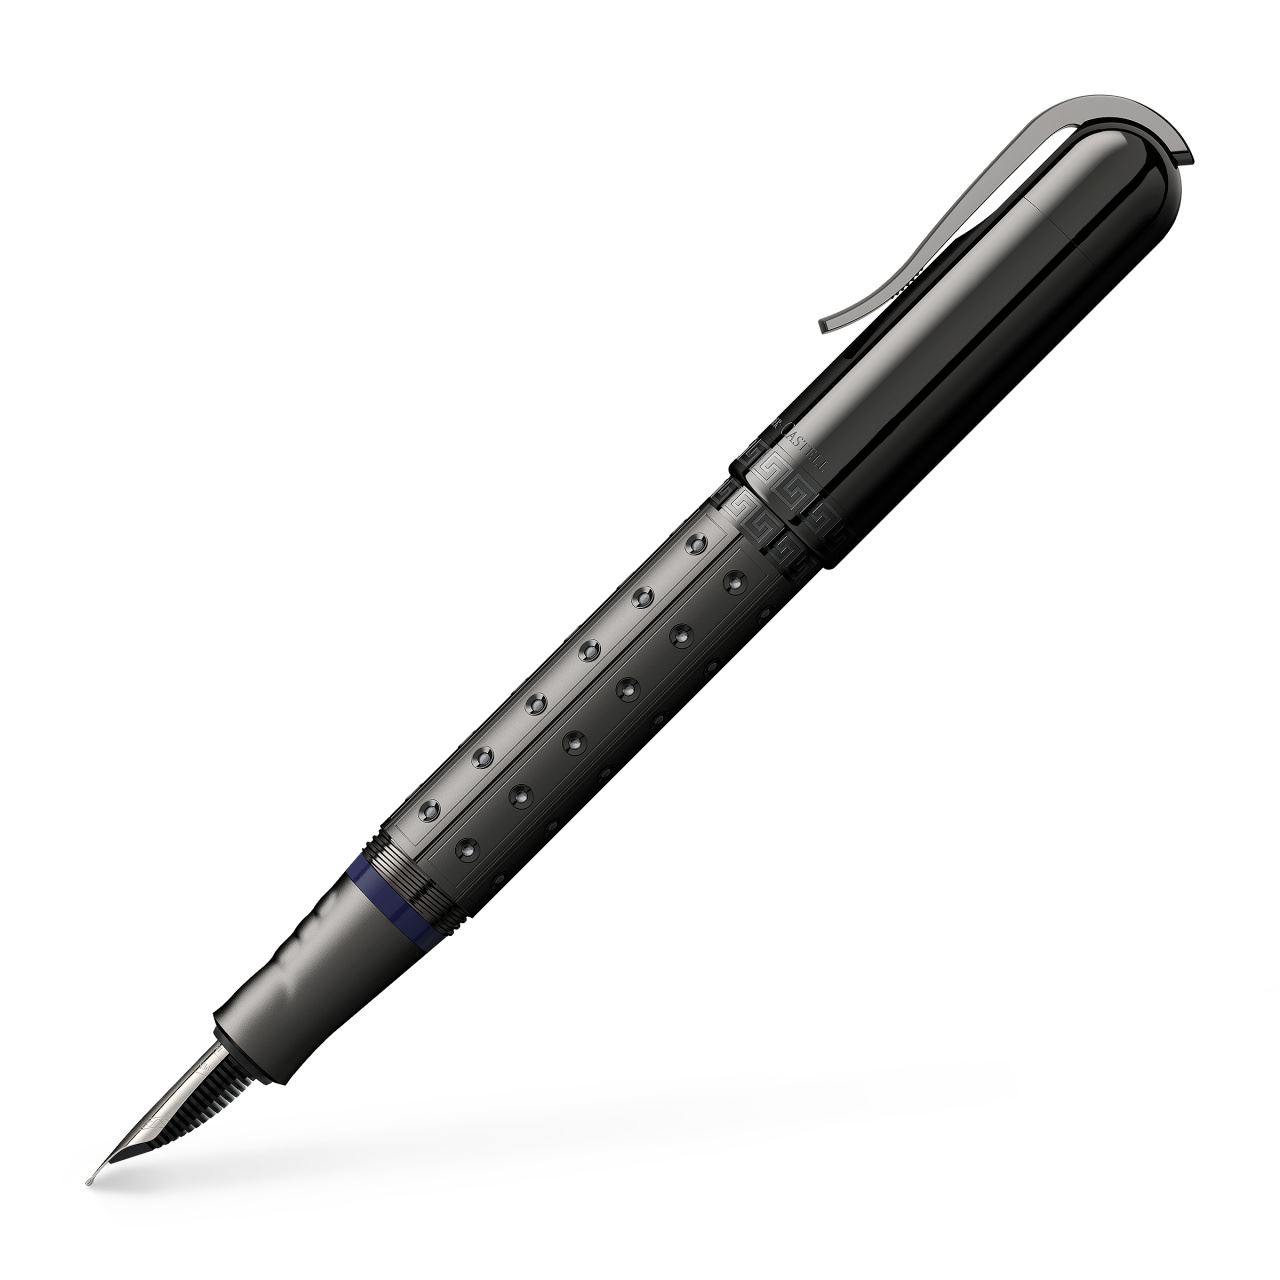 Graf-von-Faber-Castell - Estilográfica Pen of the Year 2020 Black Edition, Ancho